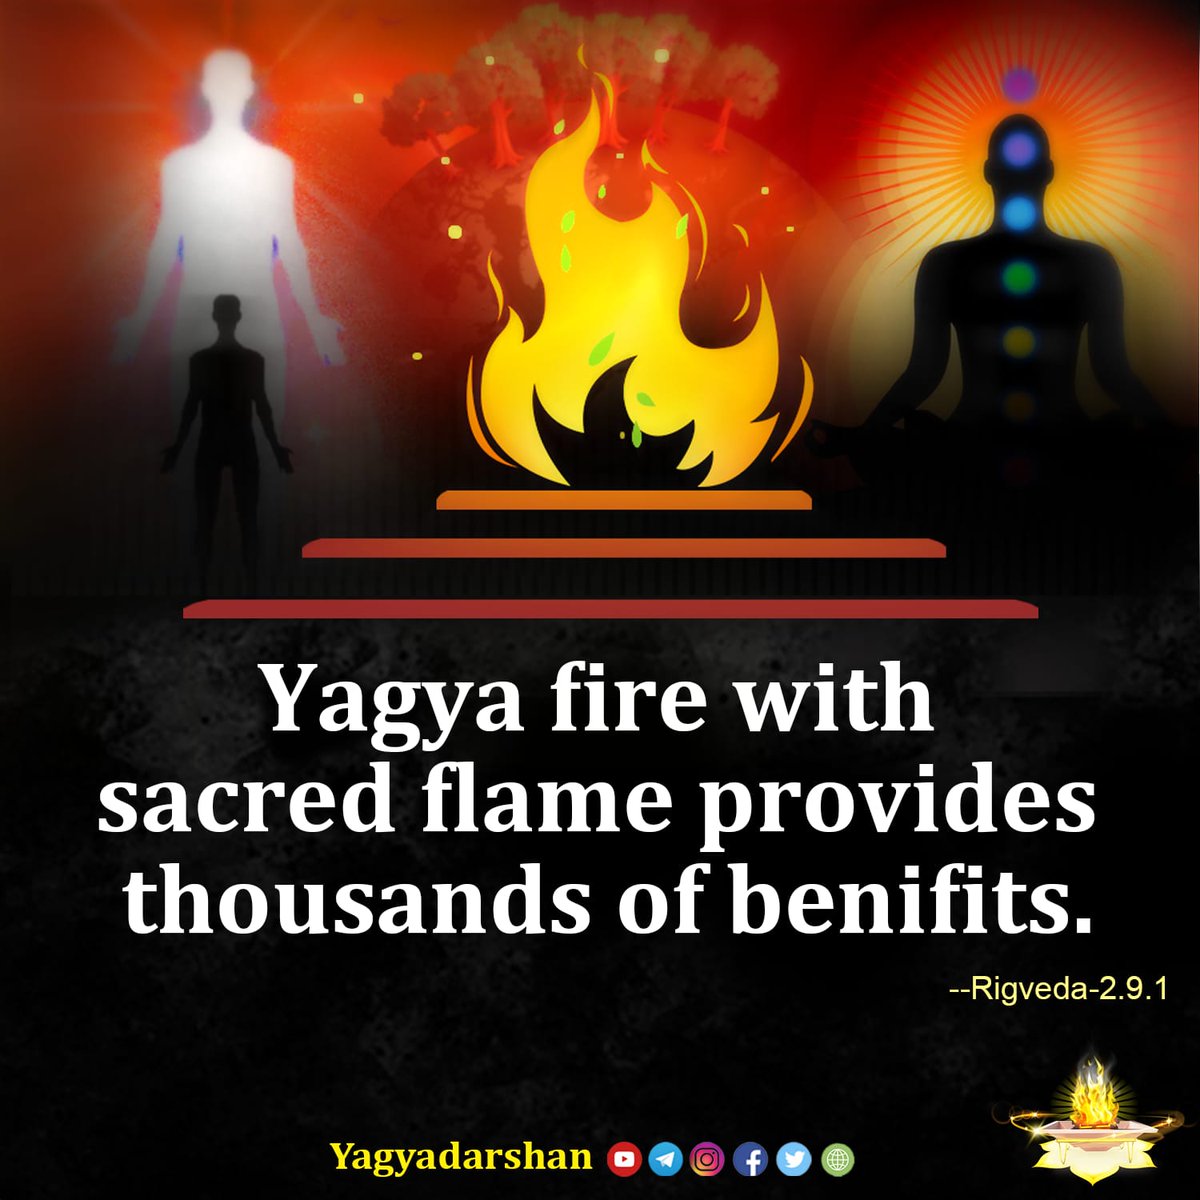 Yagya fire with sacred flame provides thousands of benifits. --Rigveda-2.9.1

#yagya_fire #benifits_of_yagya #yagyadarshan